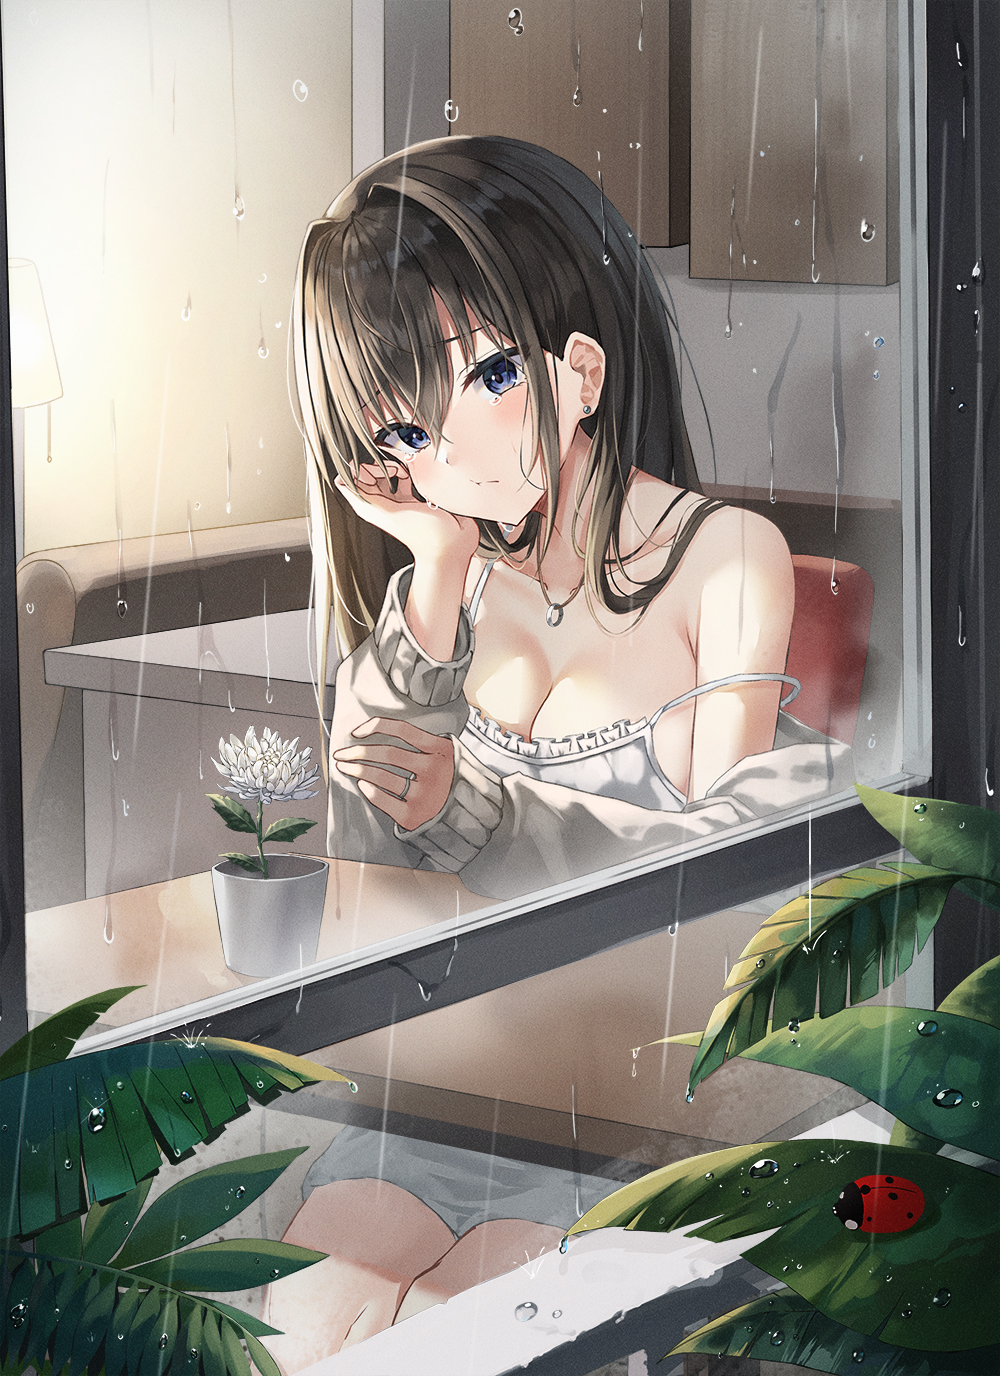 Anime 1000x1376 anime anime girls Lkeris artwork blue eyes dark hair tears cleavage window